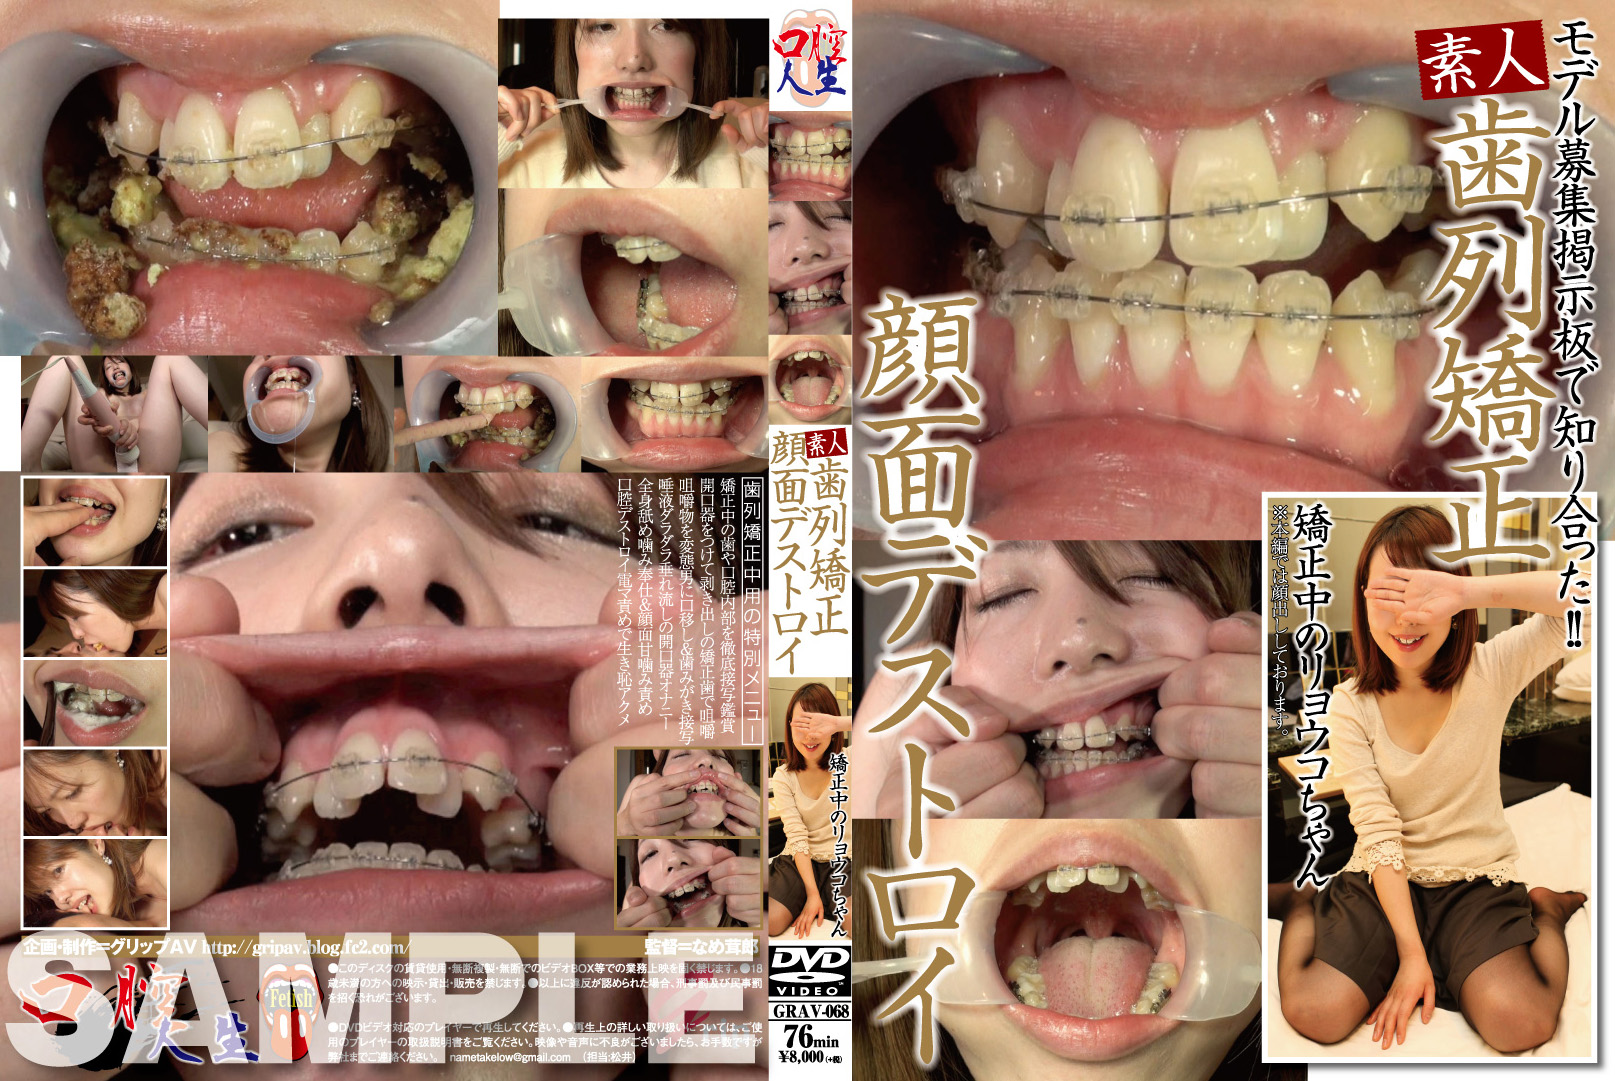 Ryoko Chan teeth fetish